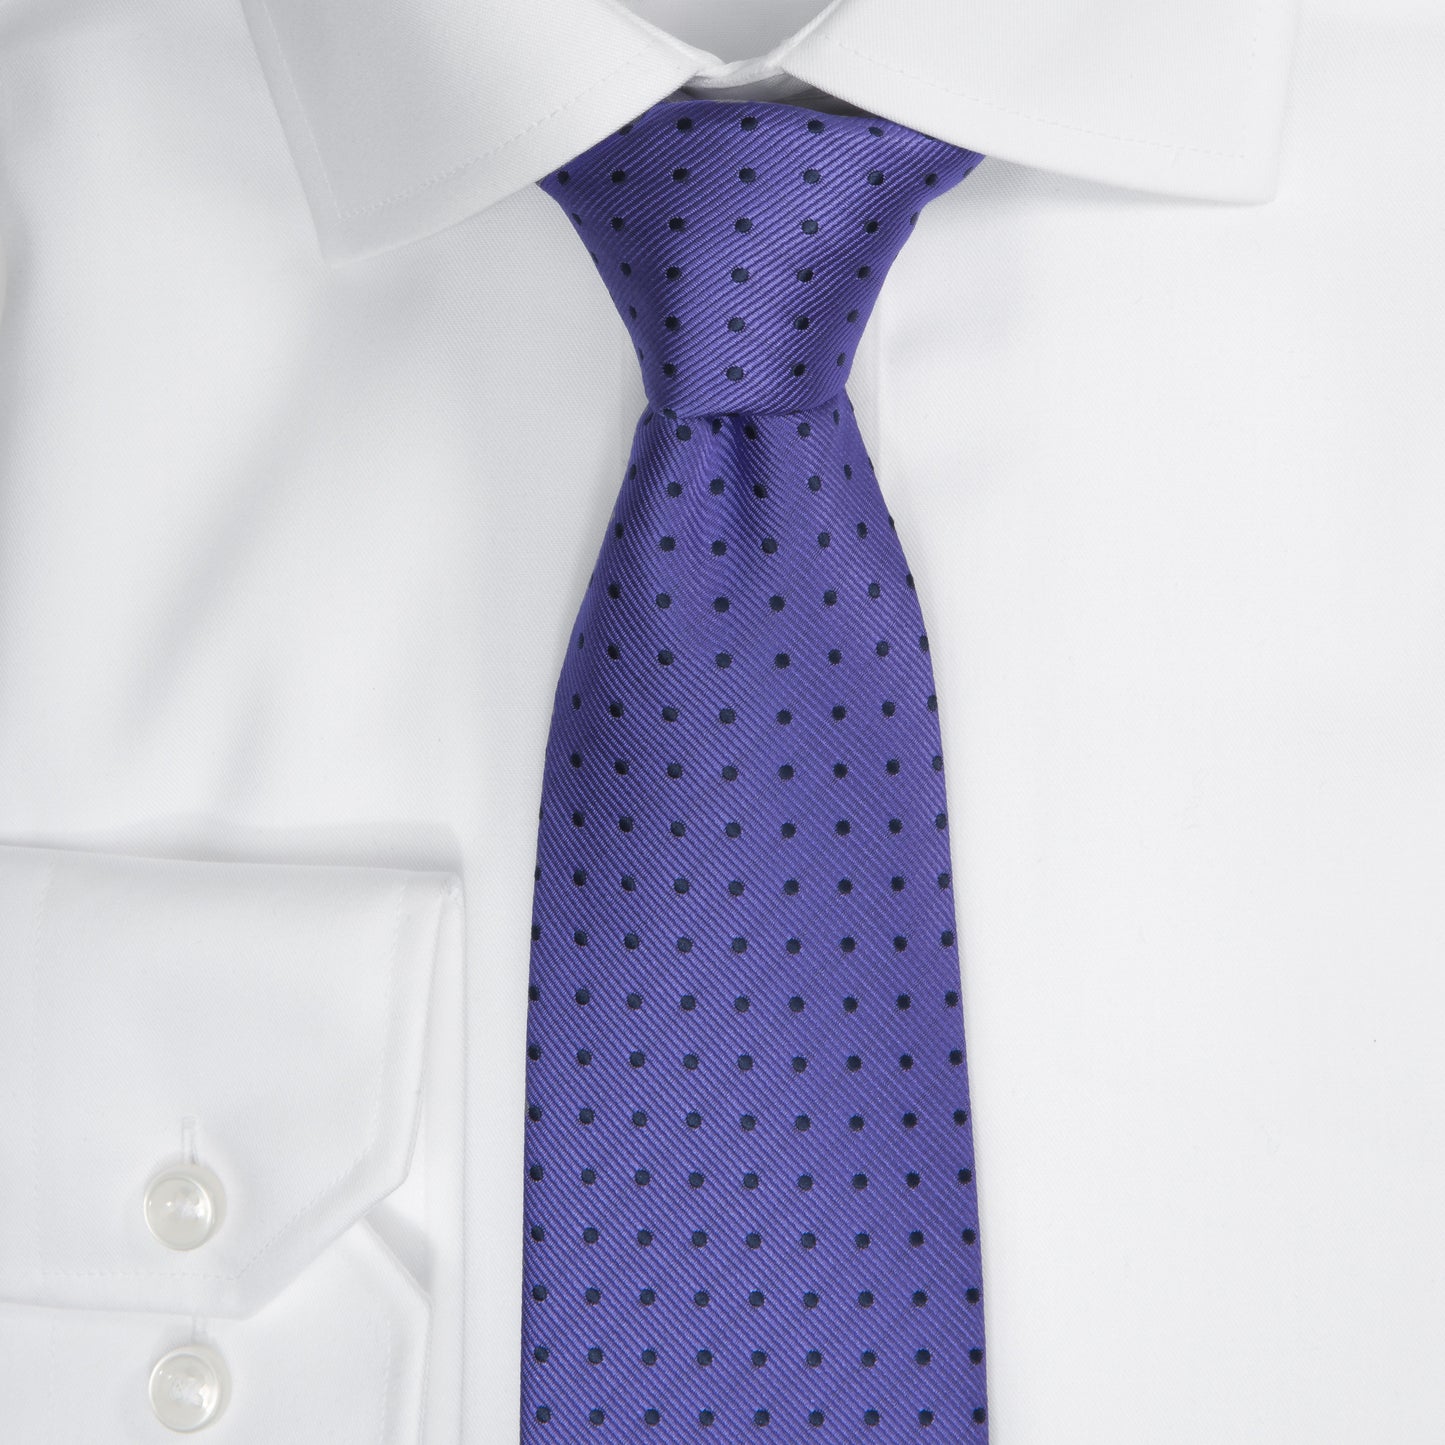 Dotted Tie - 806 purple/navy